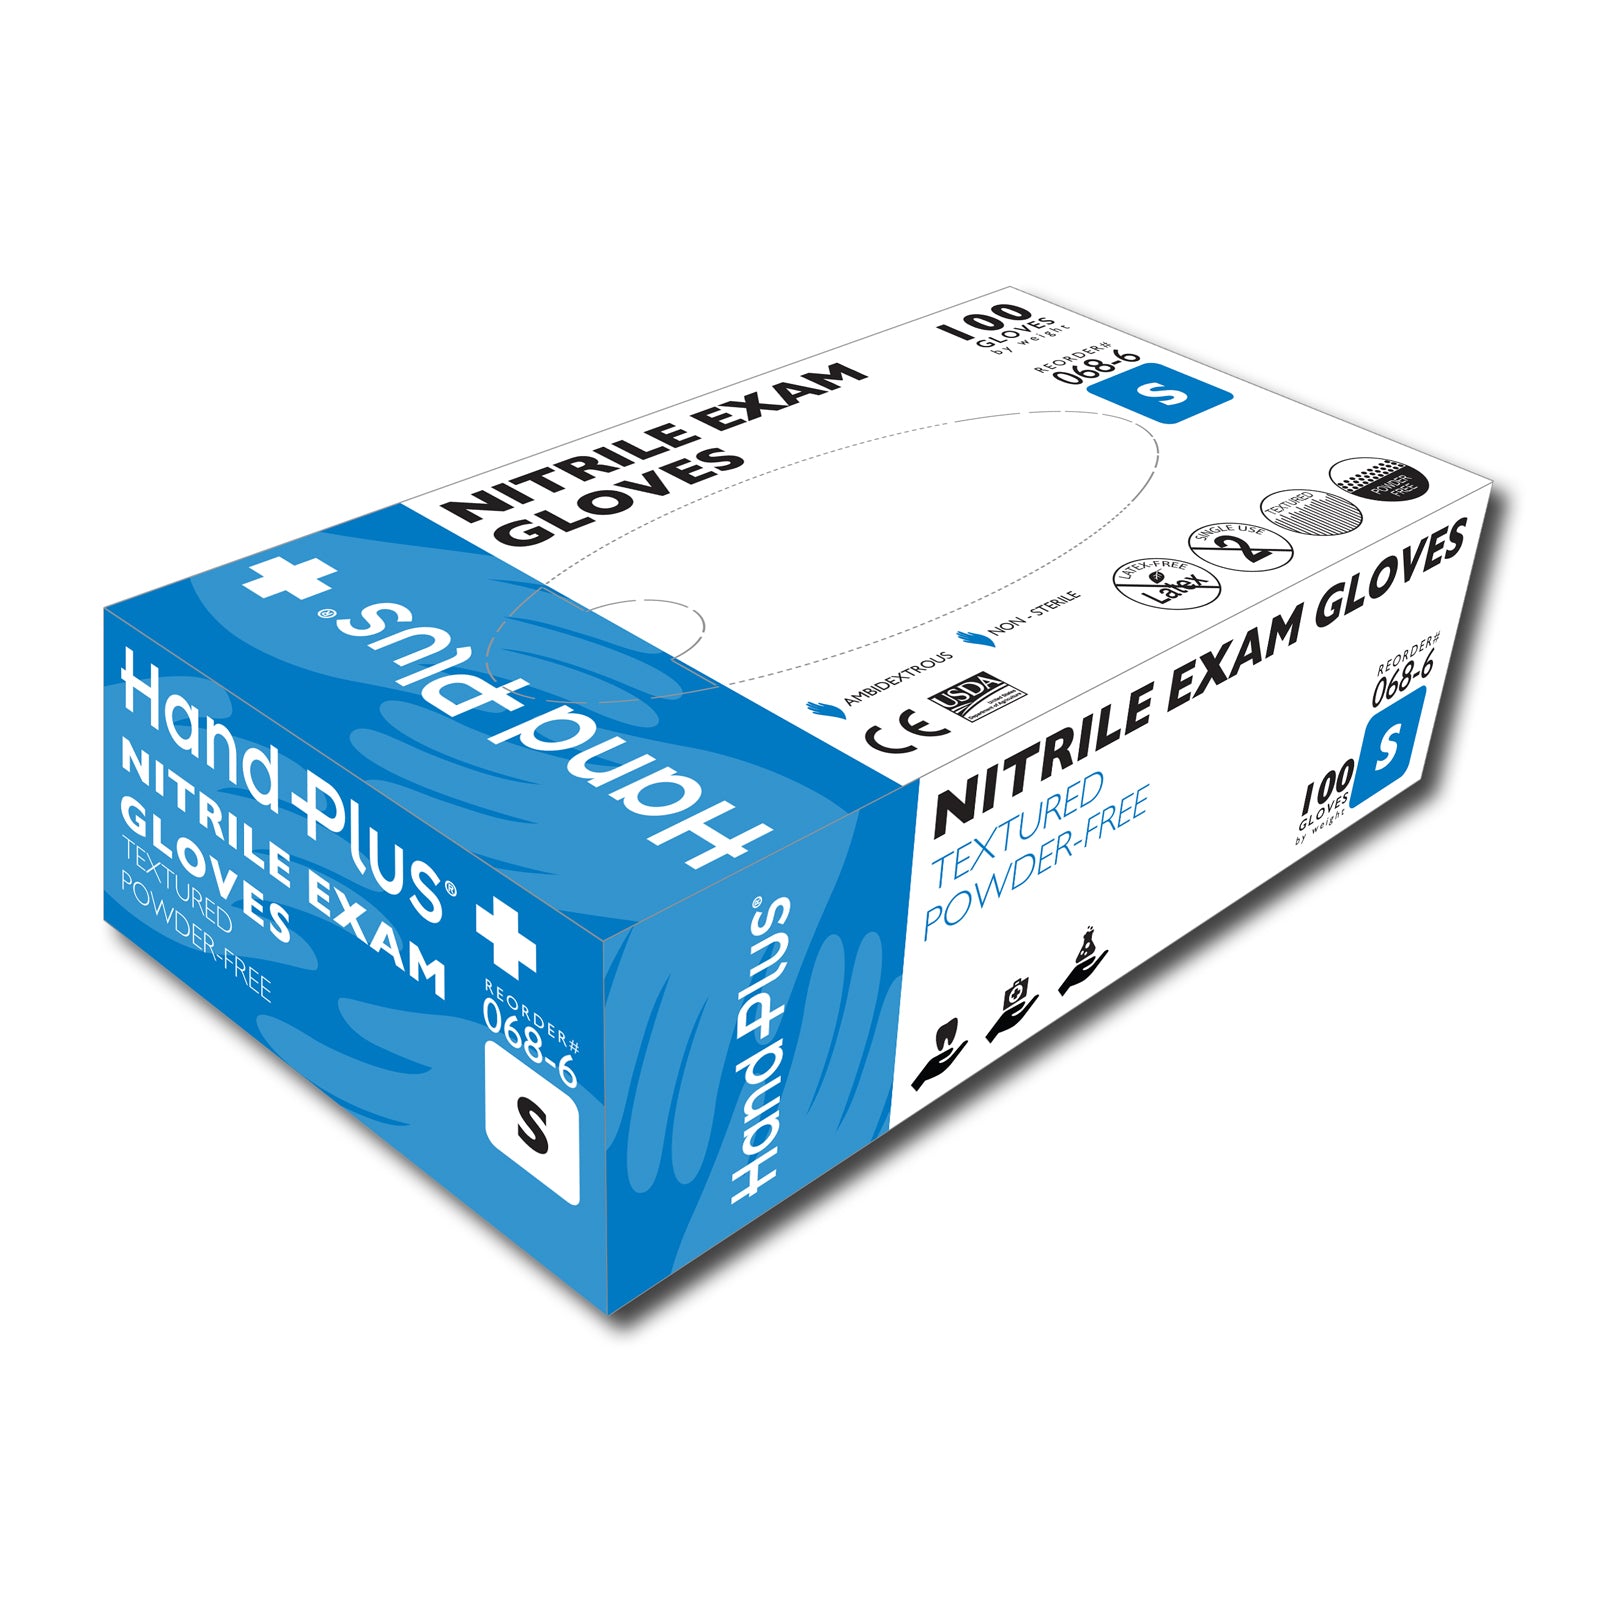 Uniseal-HandPlus Nitrile Exam - Powder-Free-eSafety Supplies, Inc